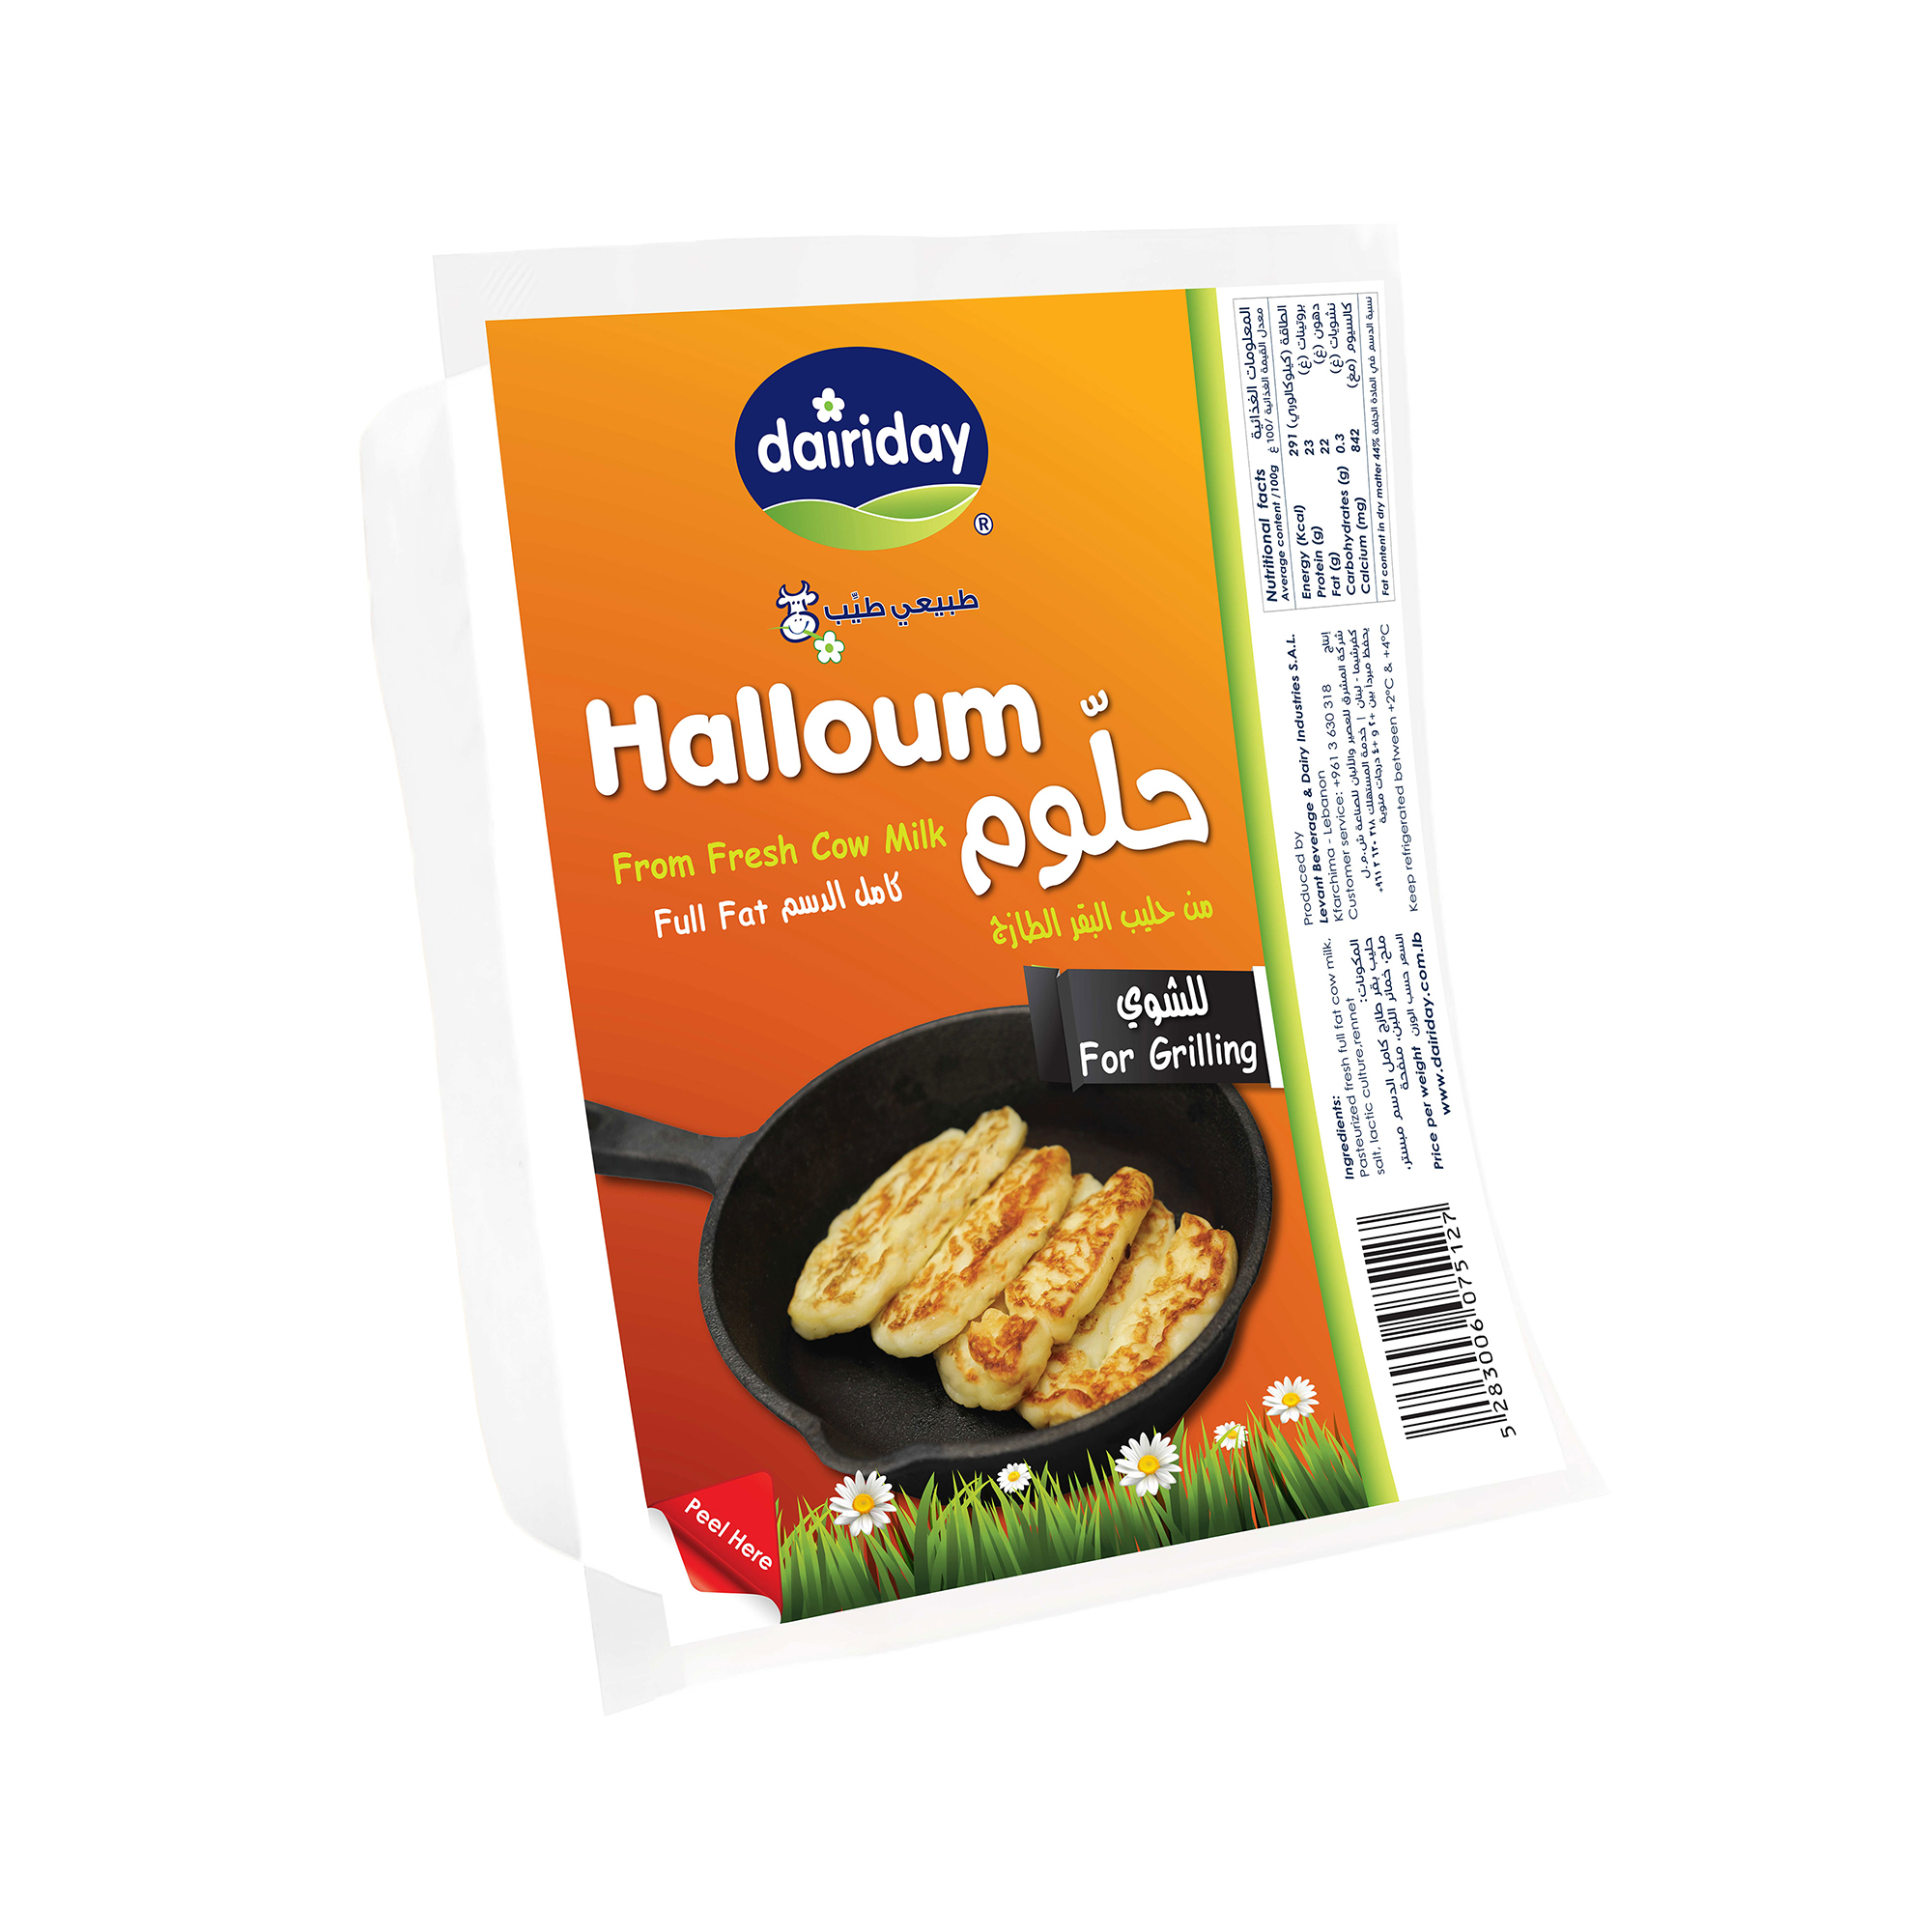 Dairiday-Halloum-Grill-white-cheese